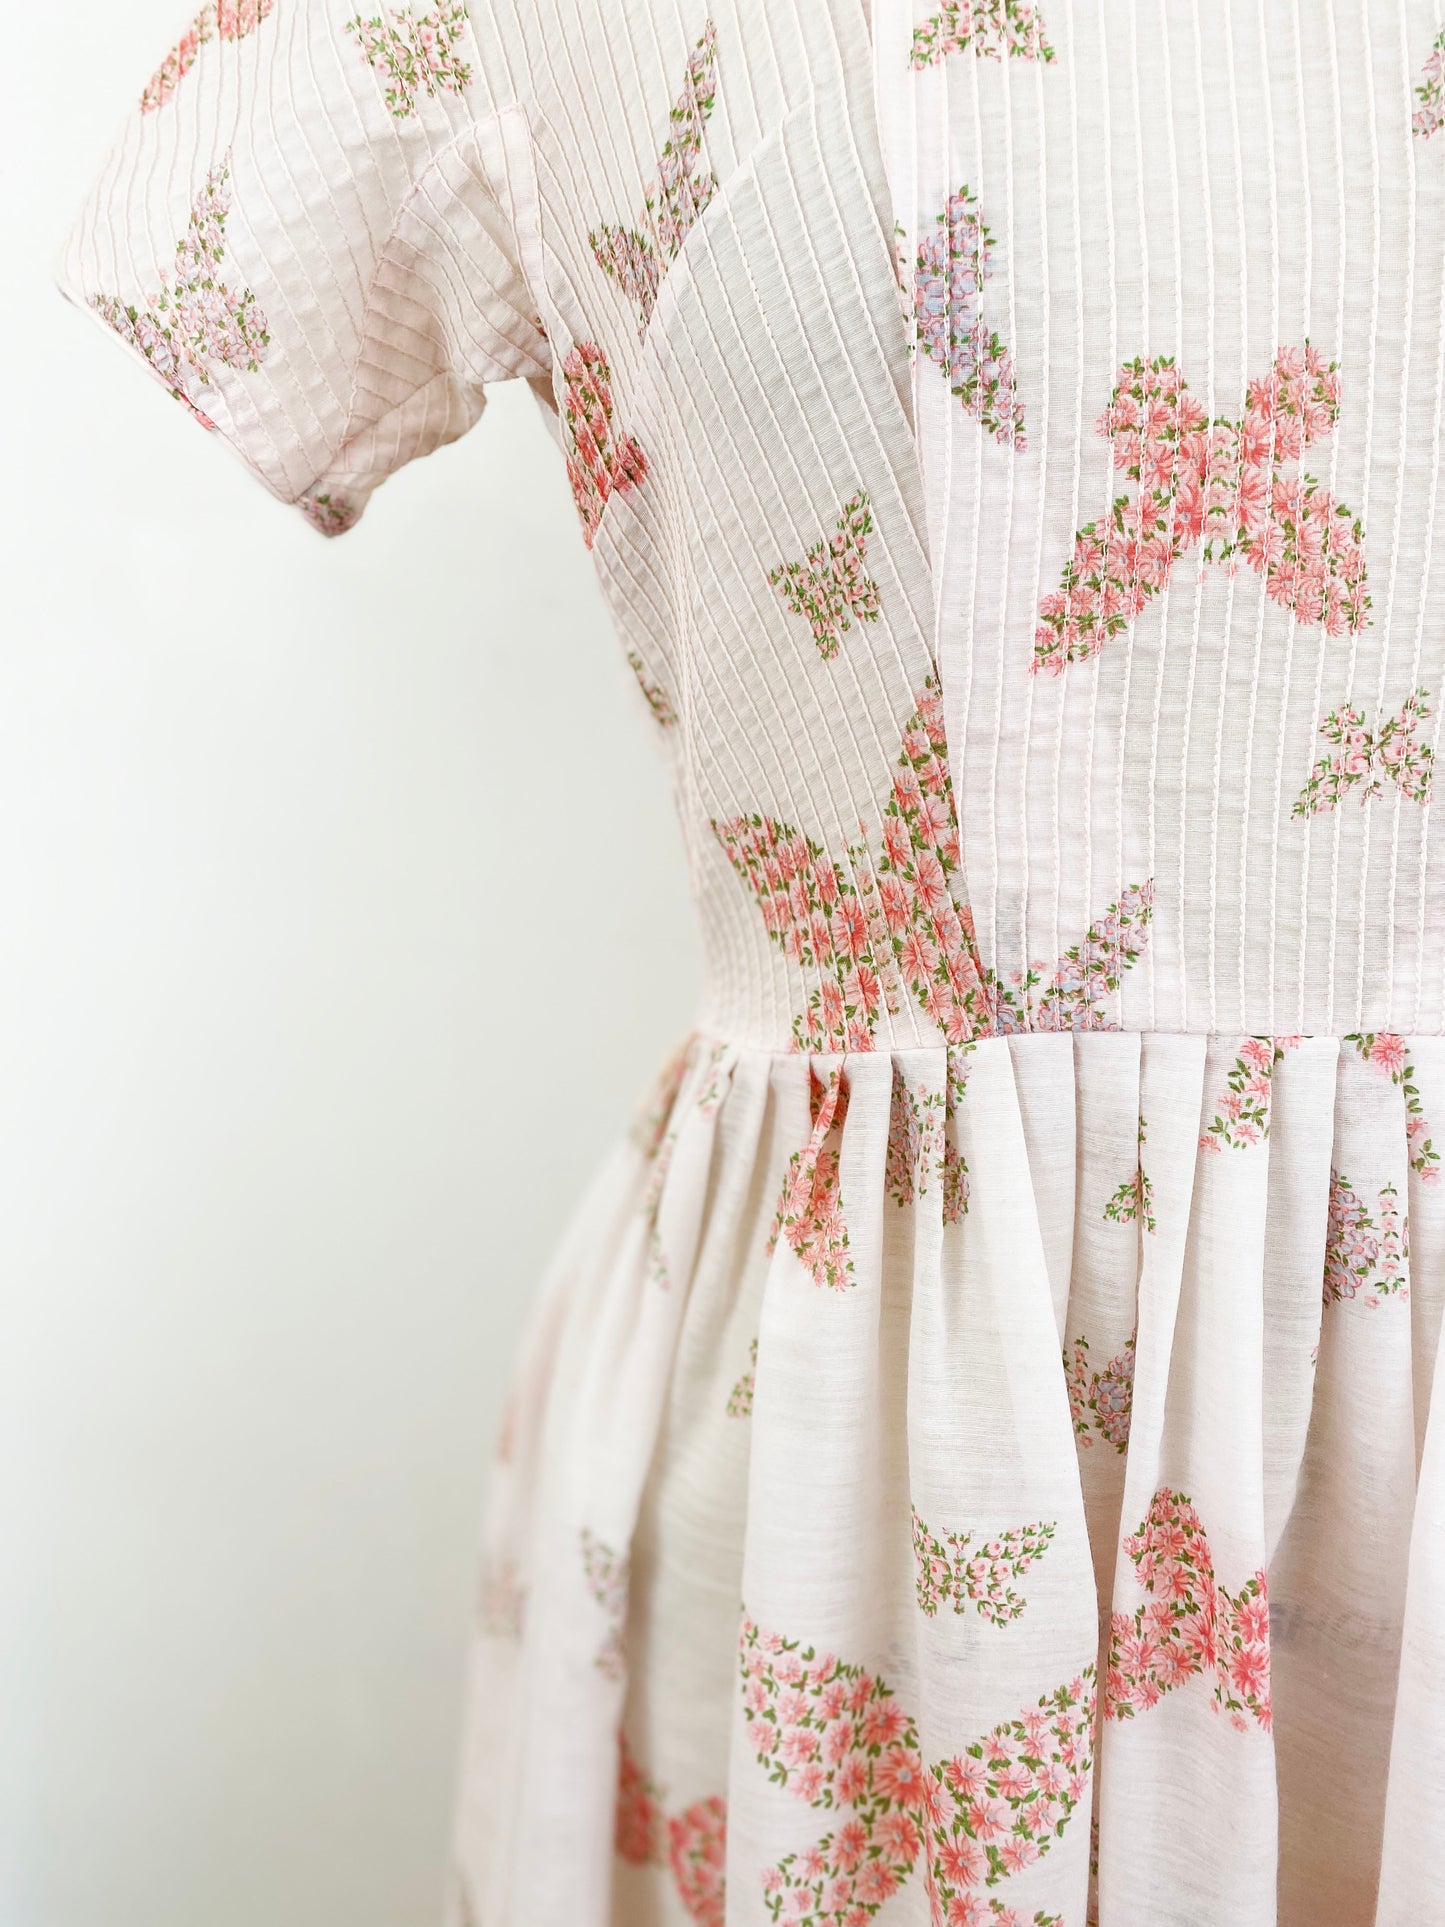 1950s L'Aiglon Light Pink Floral Butterfly Print Cotton A-line Dress Retro Day Dress / Small